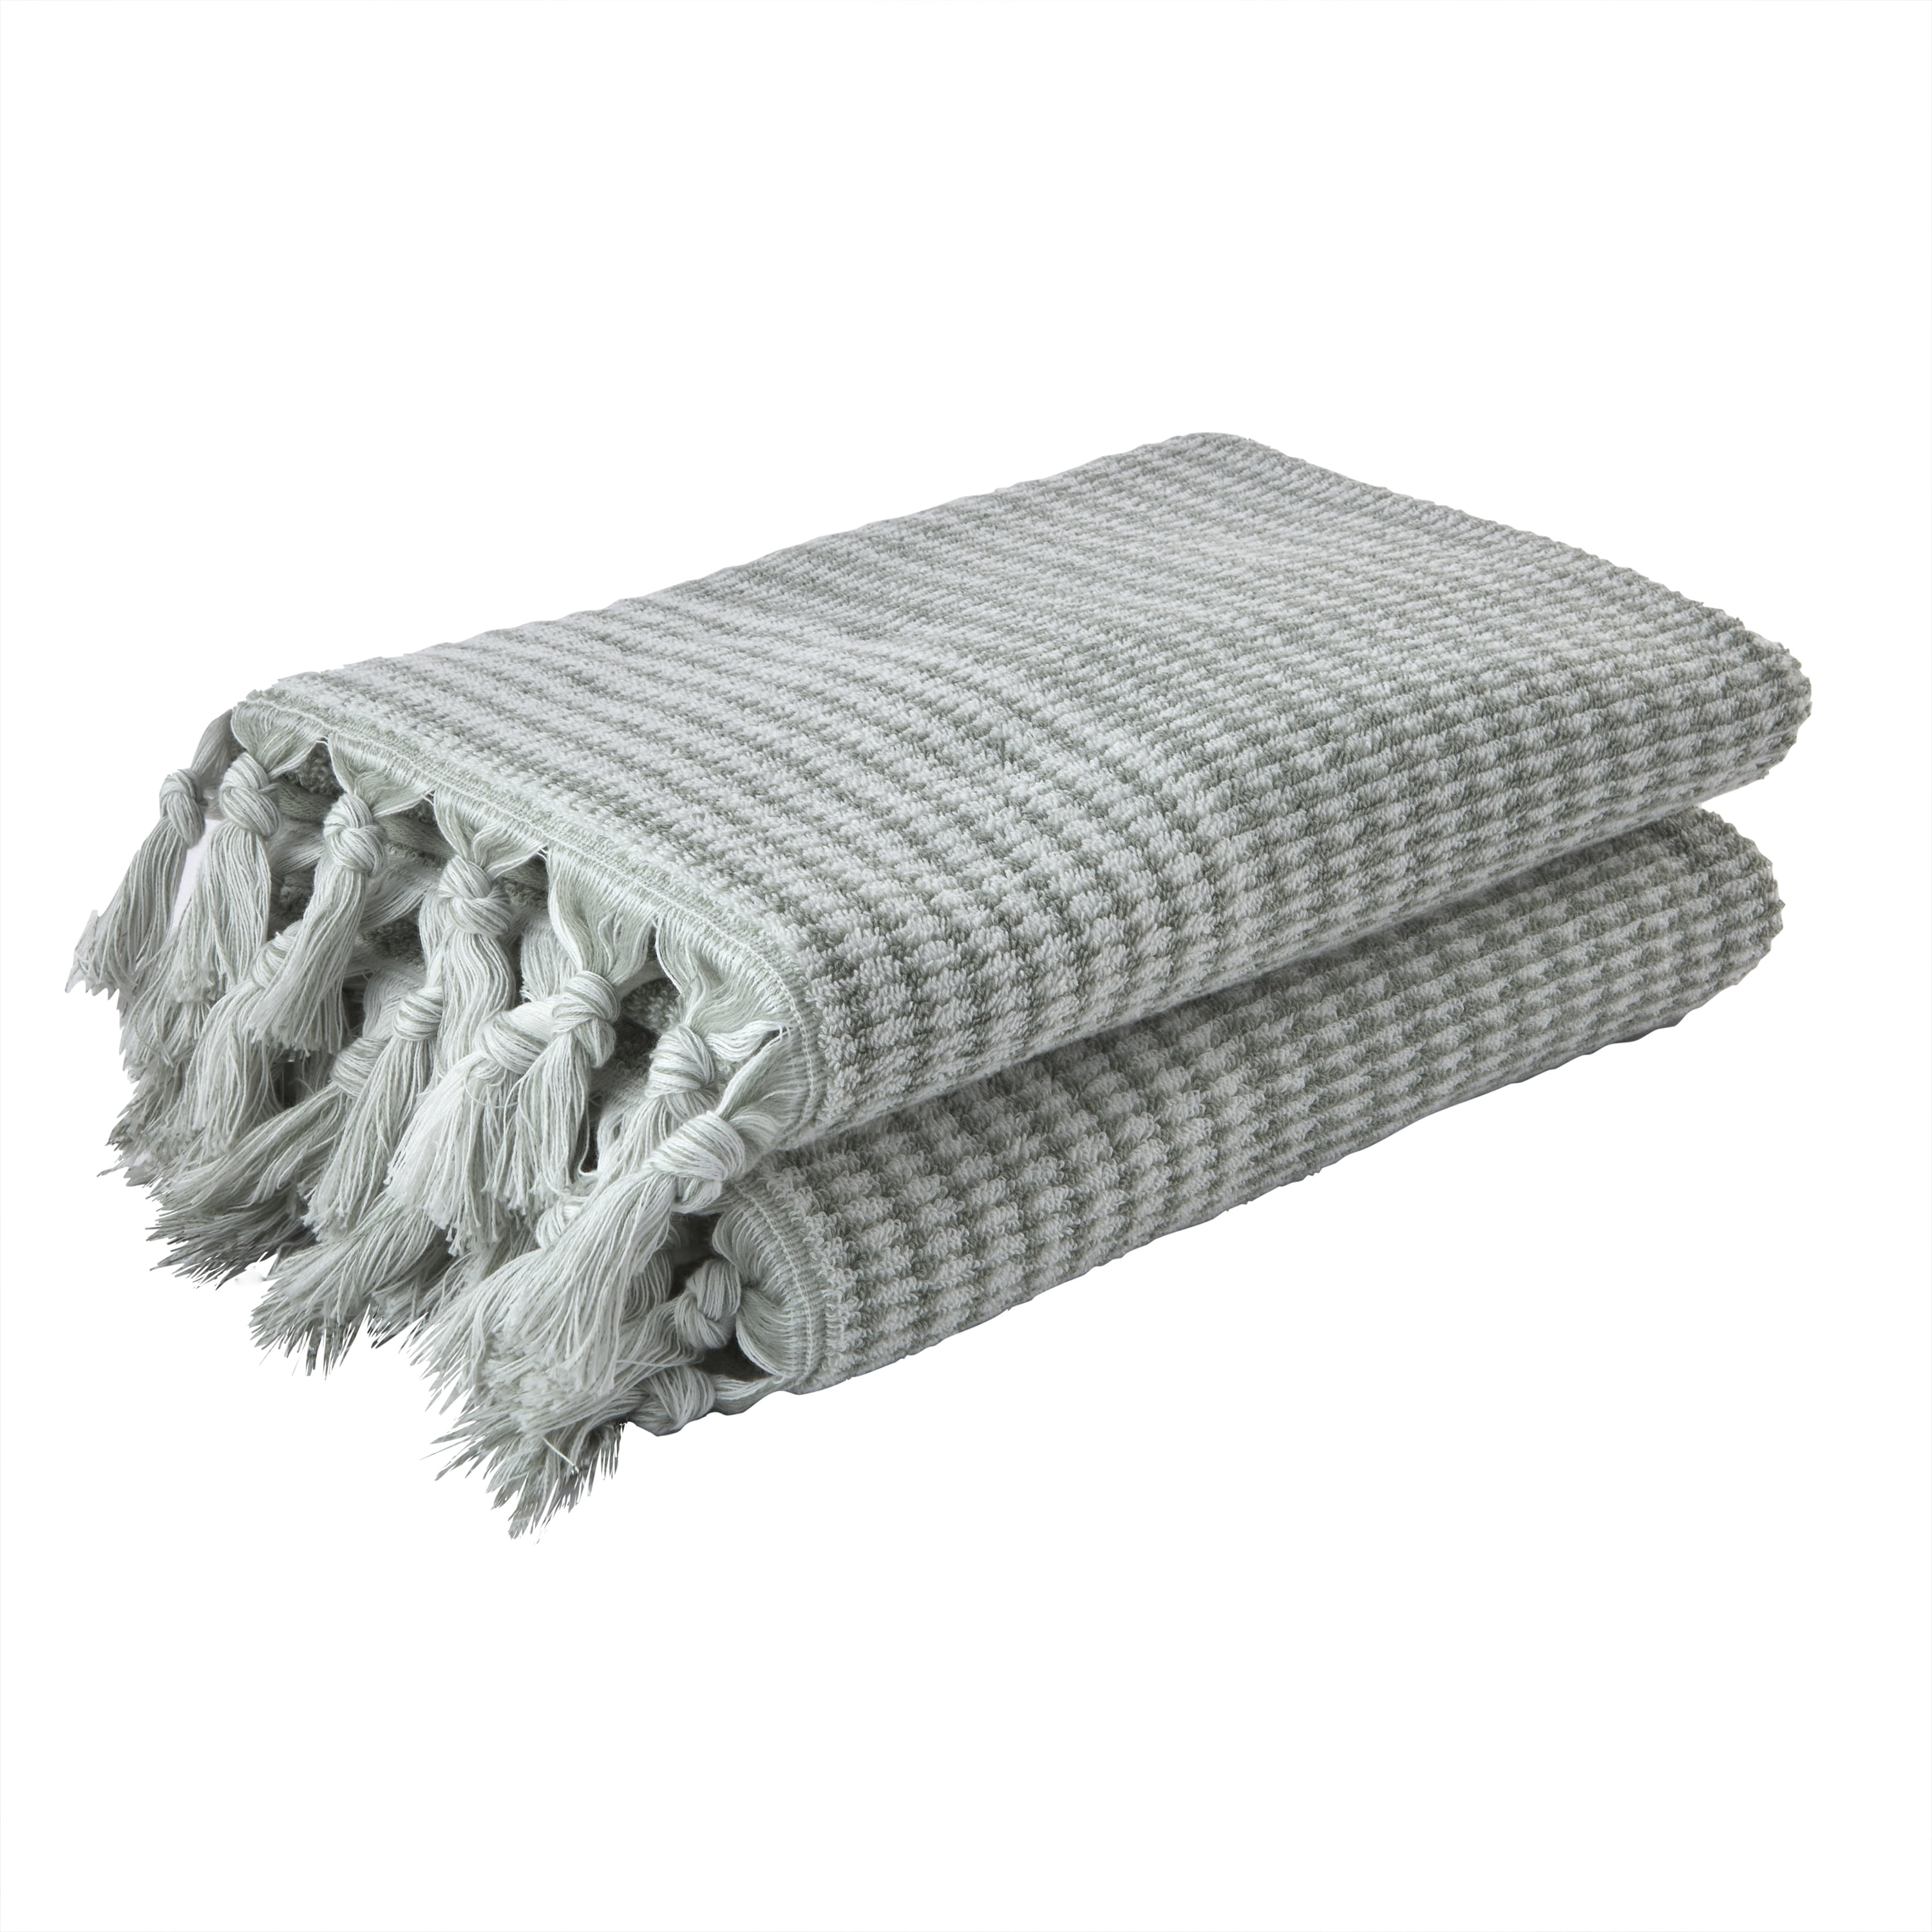 4-Piece White Boho Chic Cotton Bath Towels & Hand Towels Set with